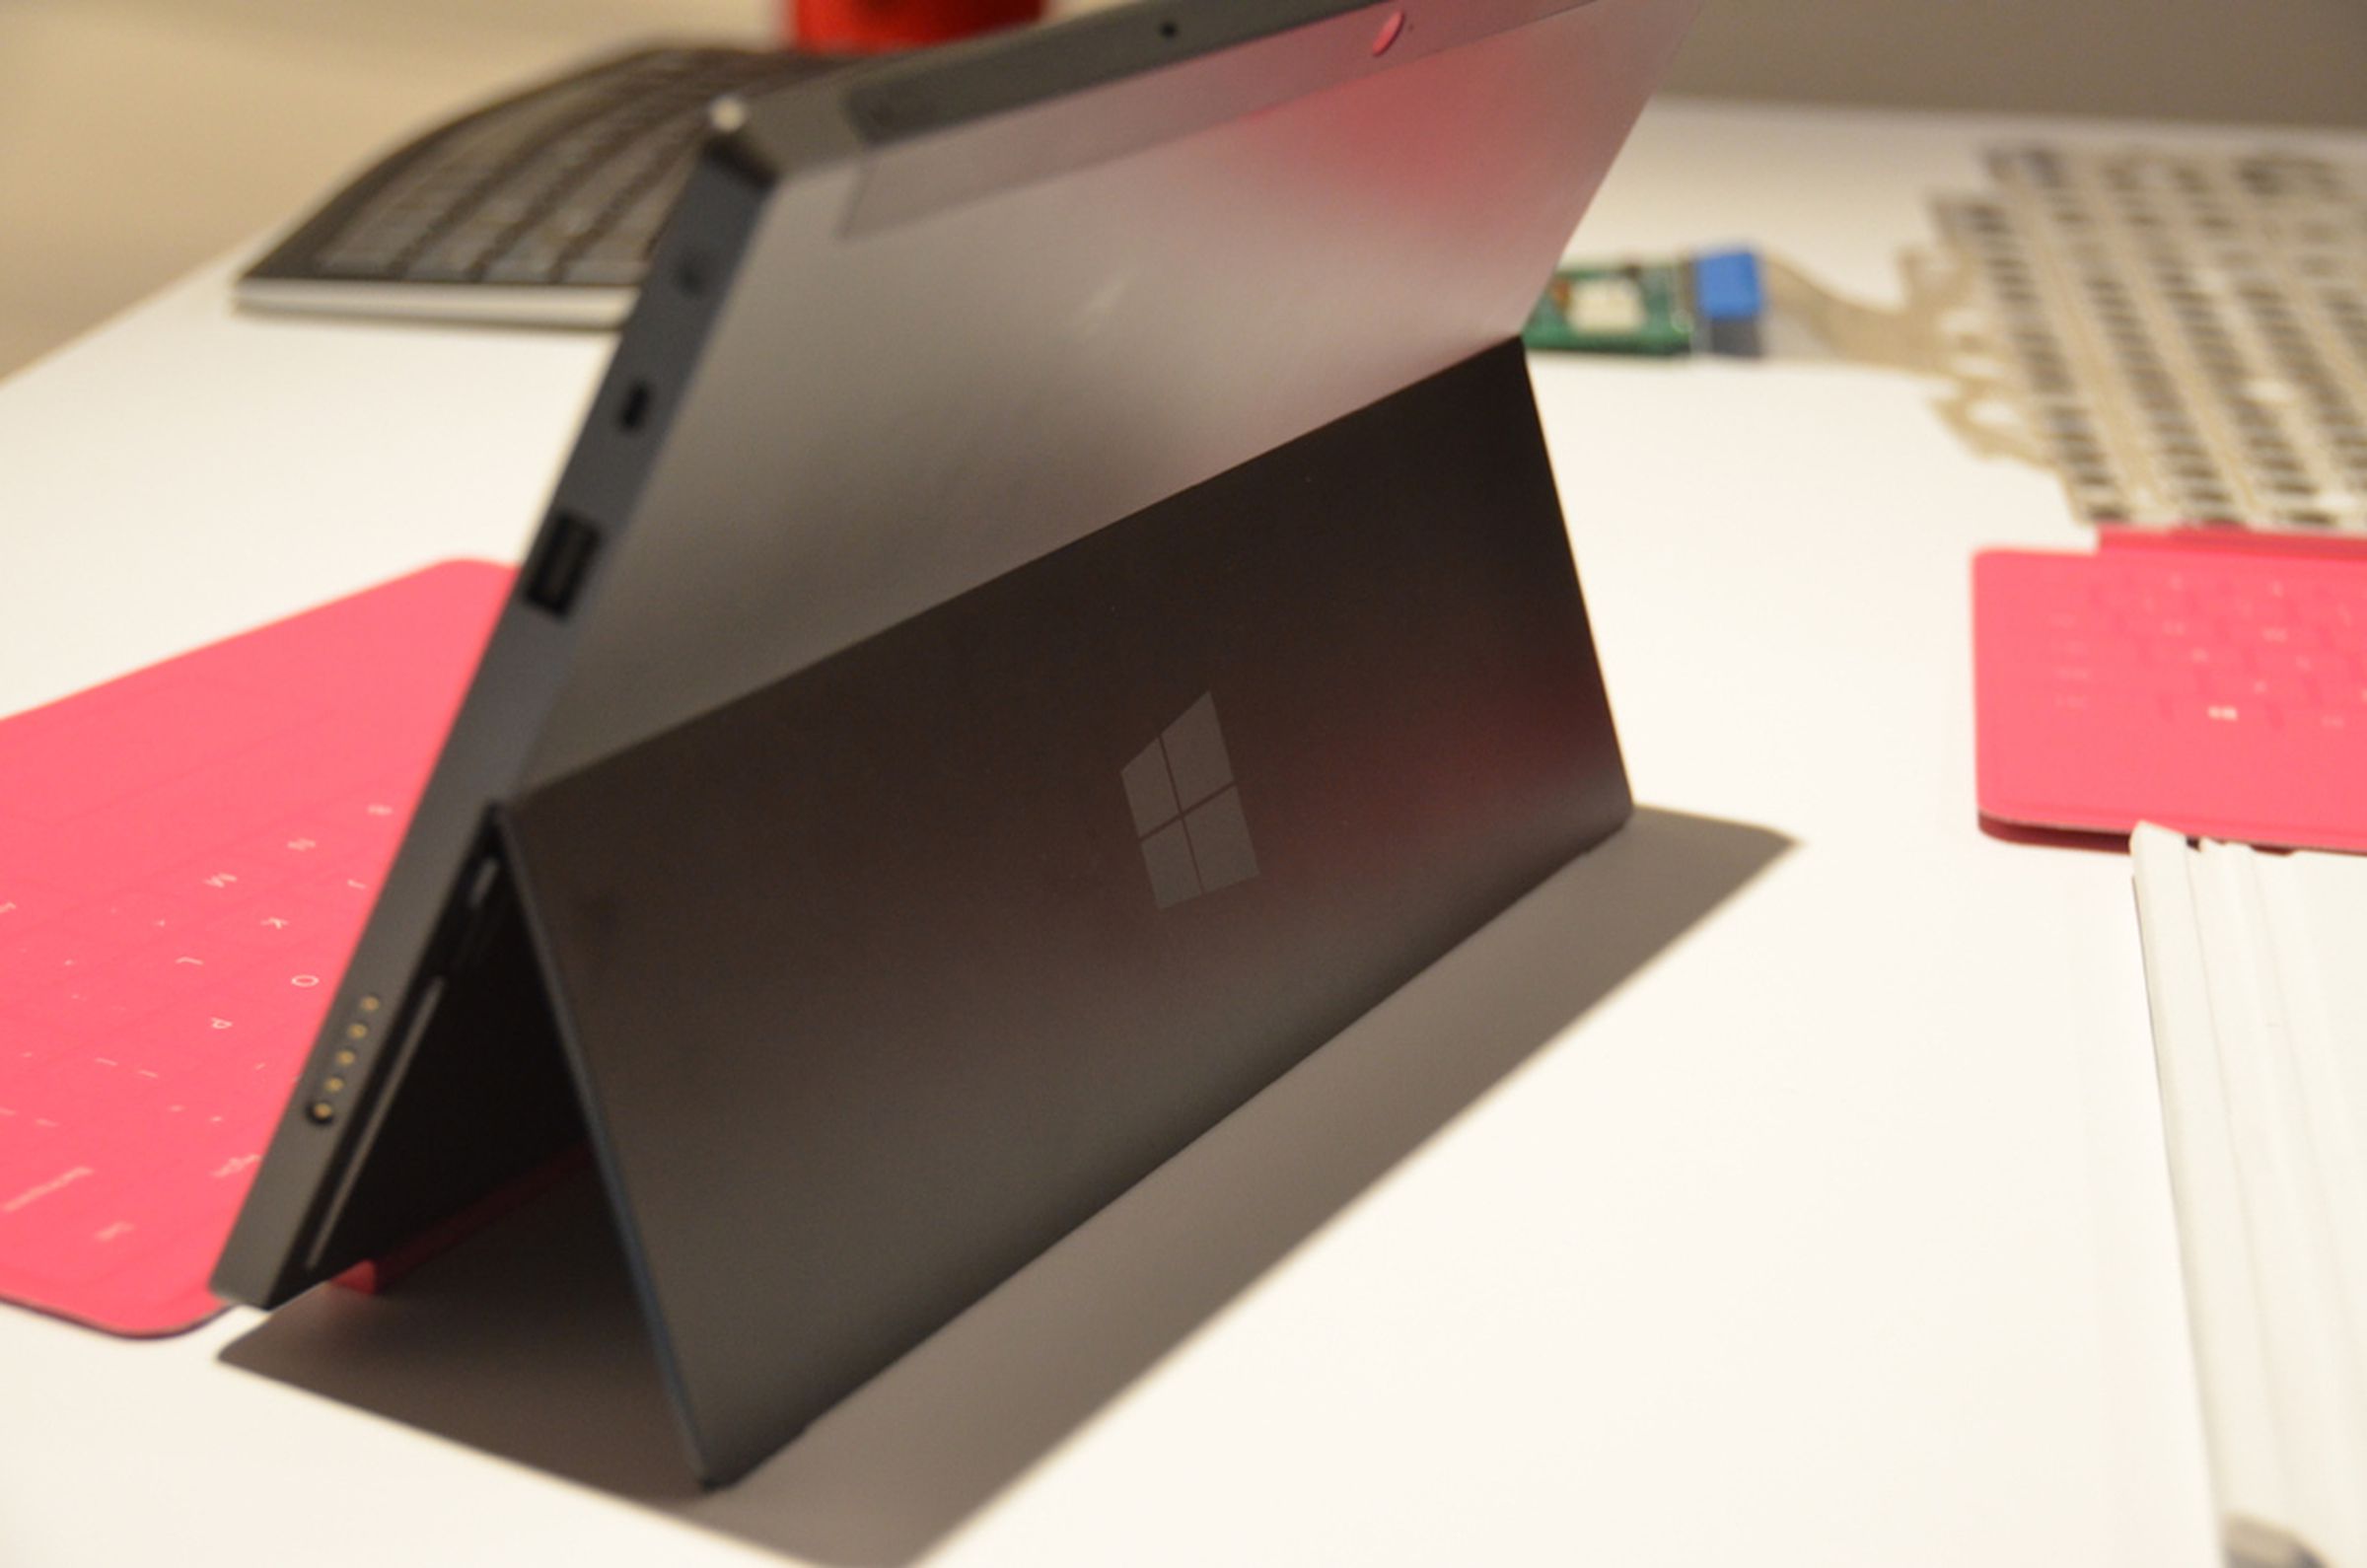 Microsoft Surface hands on photos